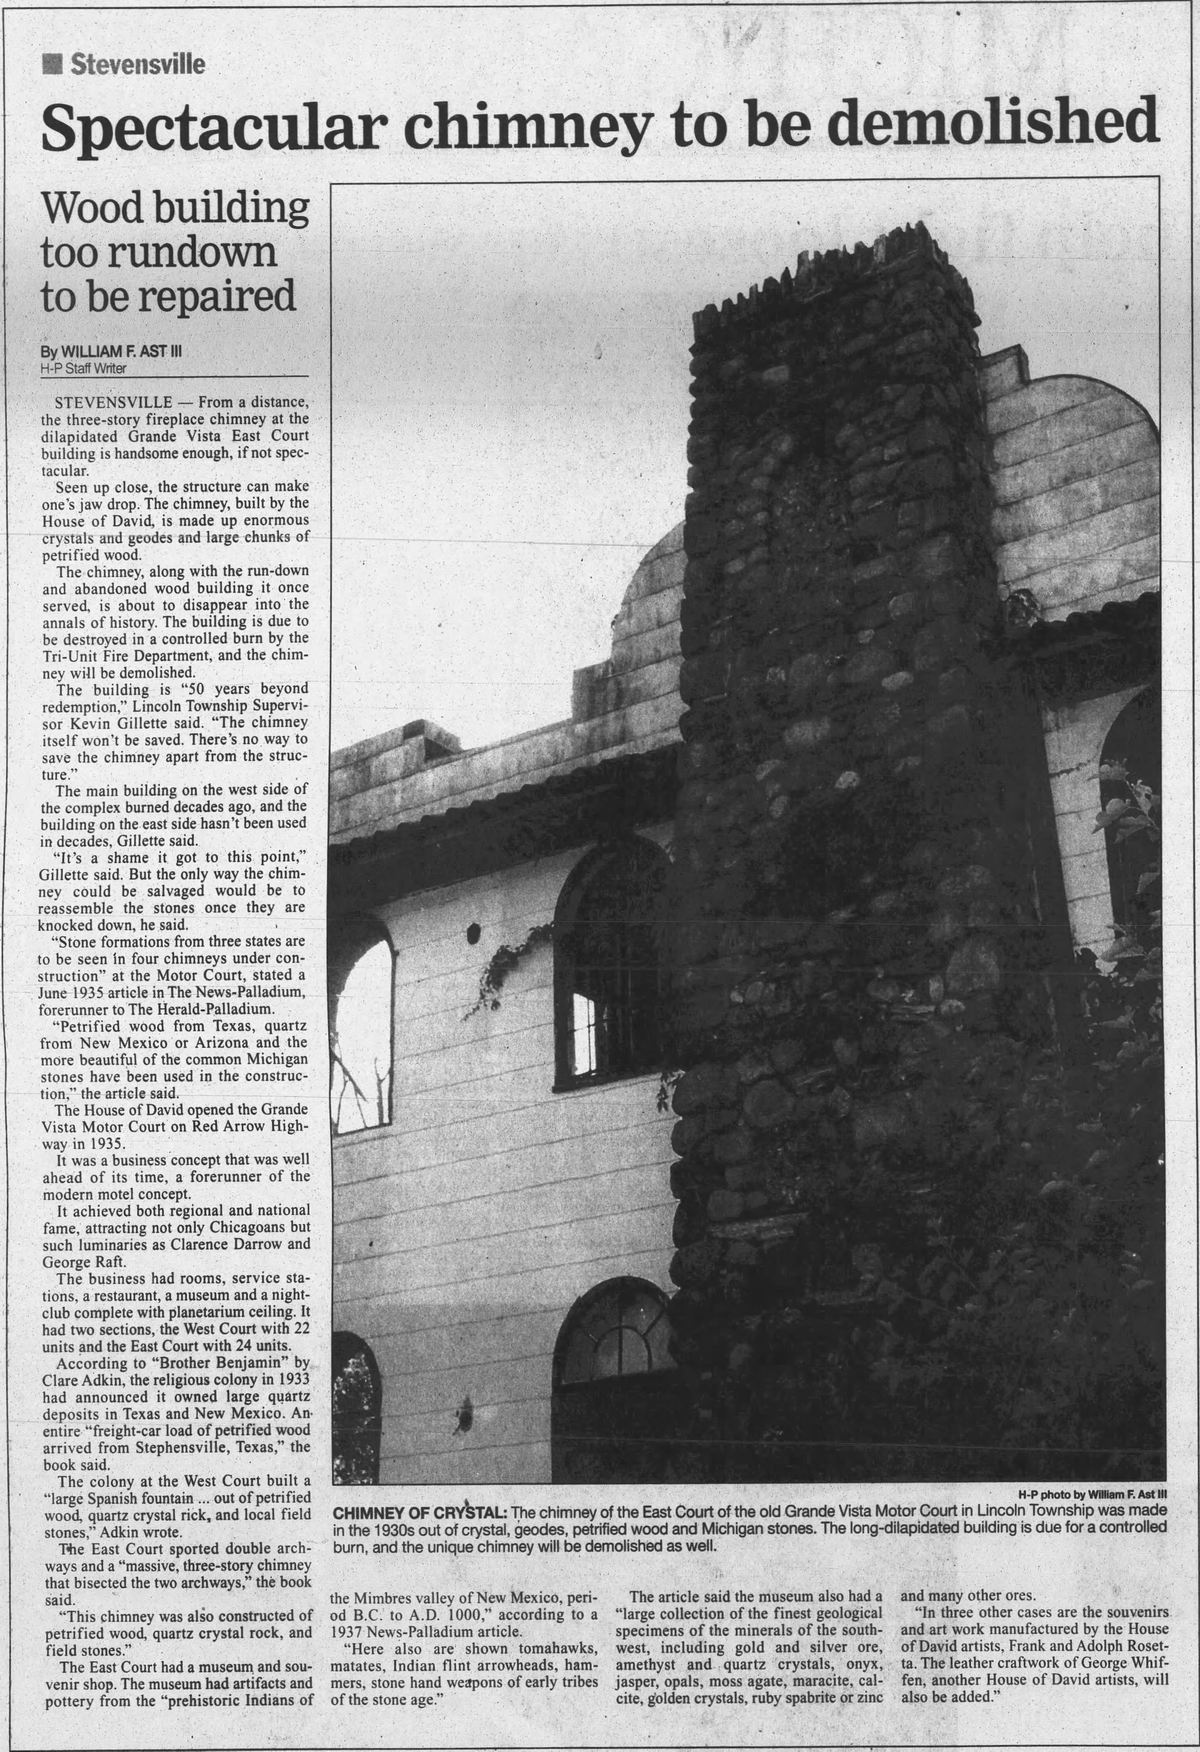 Grande Vista Resort - July 9 2000 Article On Chimney Demo